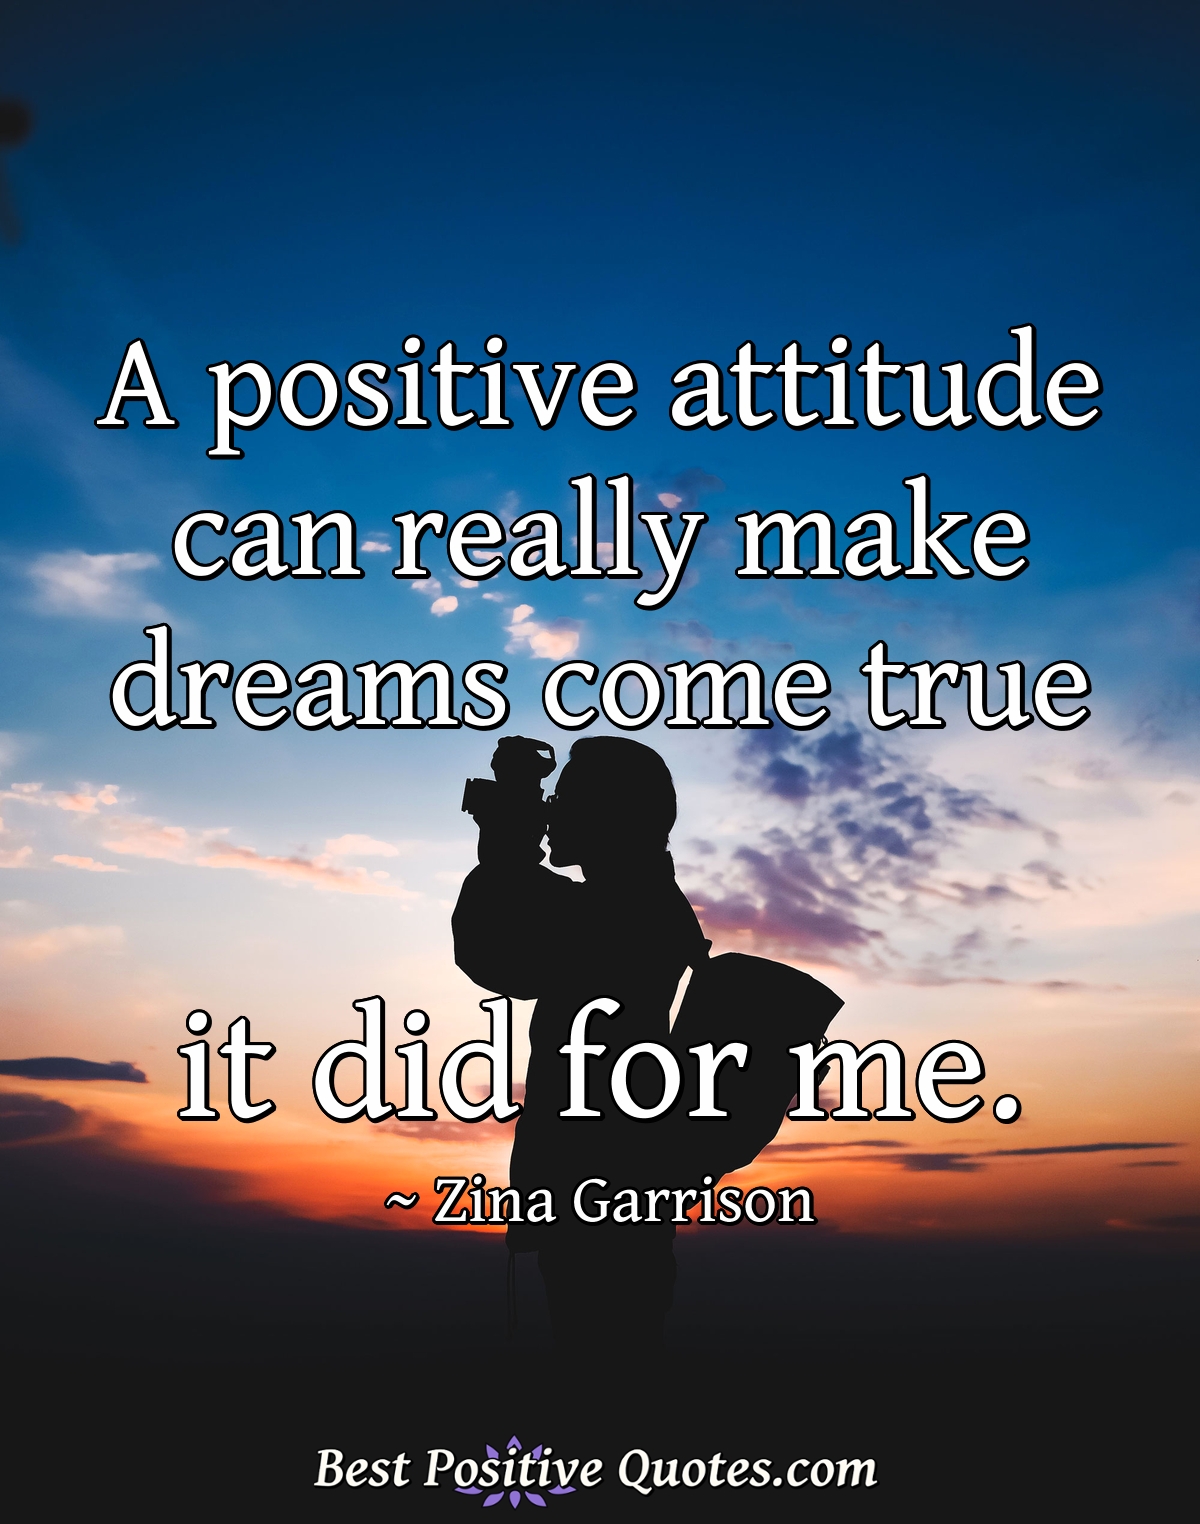 A positive attitude can really make dreams come true - it did for me. - Zina Garrison